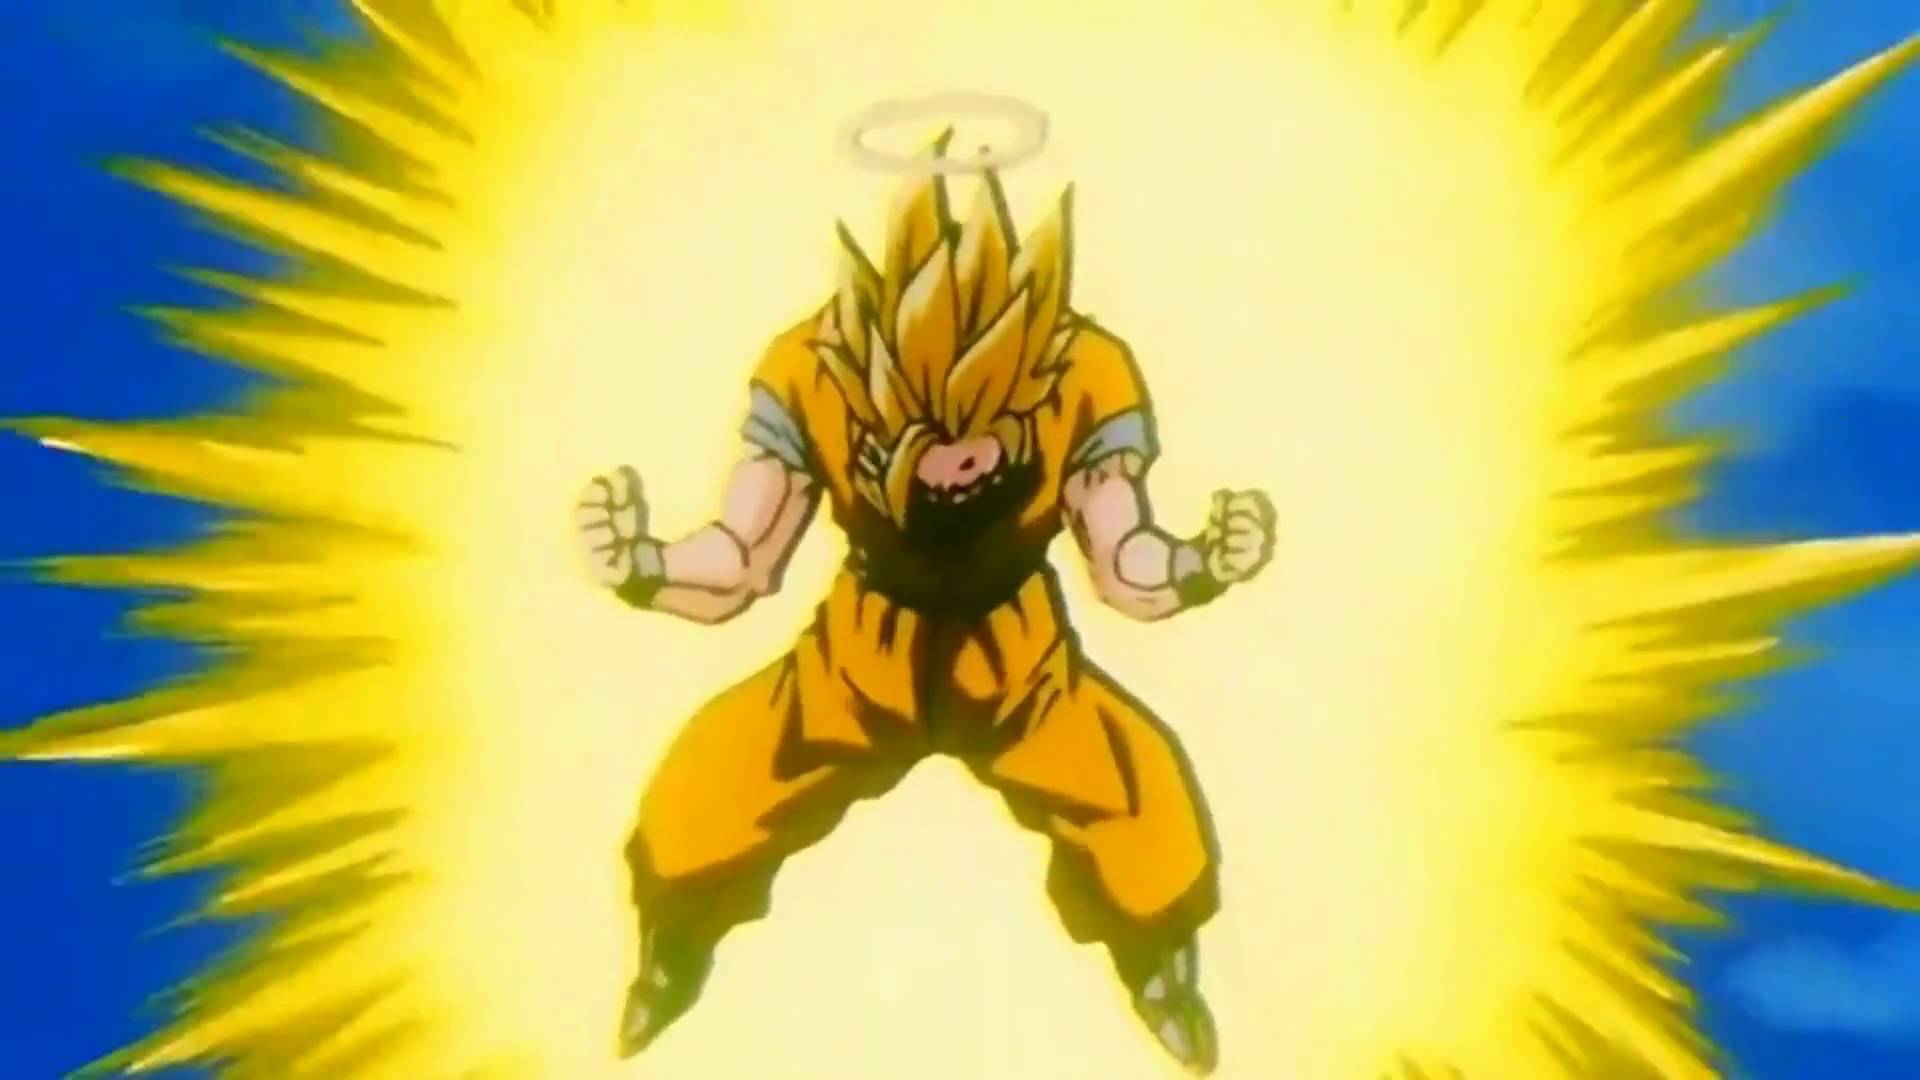 Goku Going Super Saiyan - HD Wallpaper 